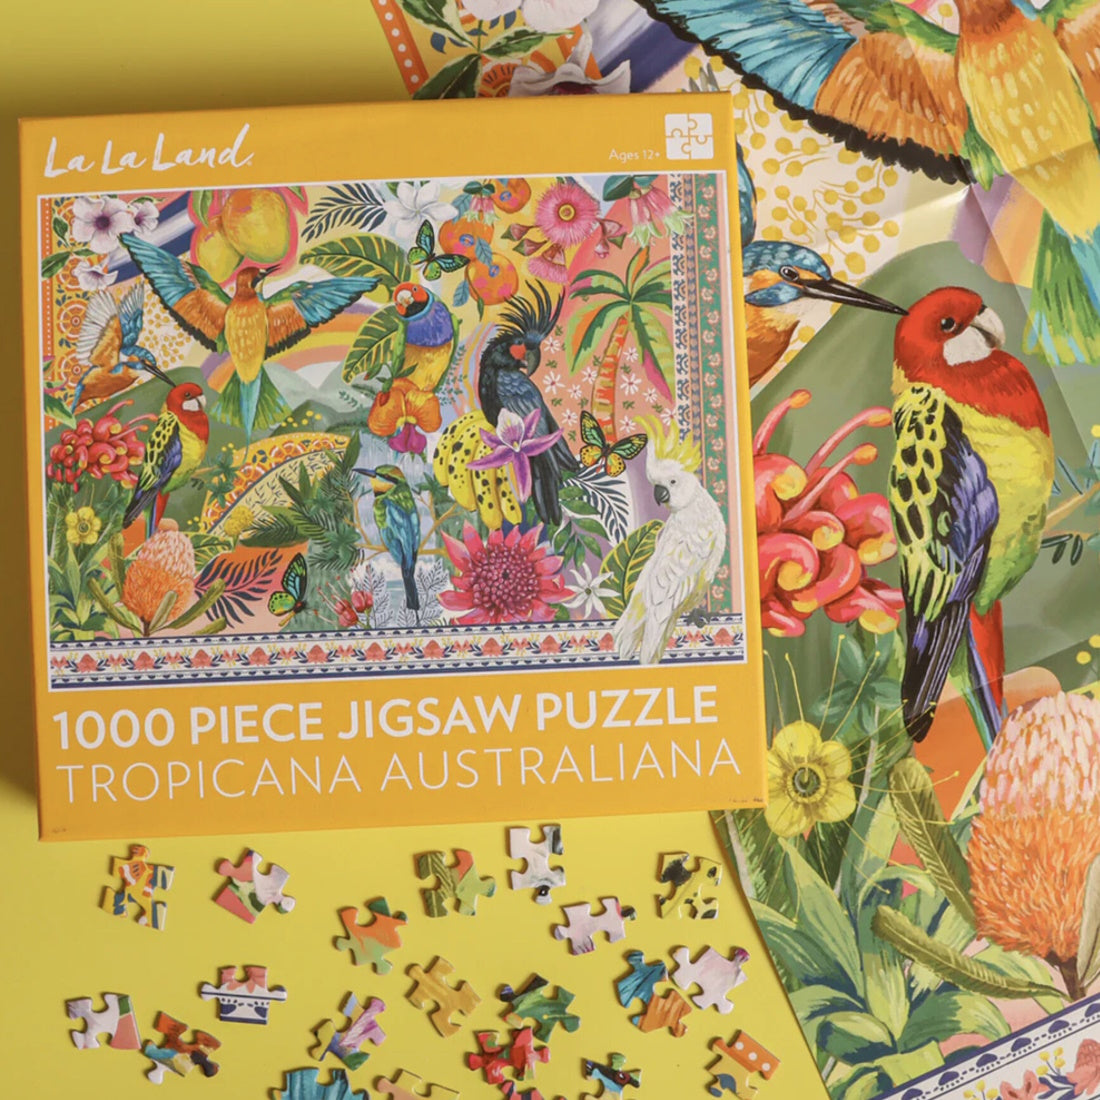 La La Land Tropicana Australiana - 1000 Piece Jigsaw Puzzle